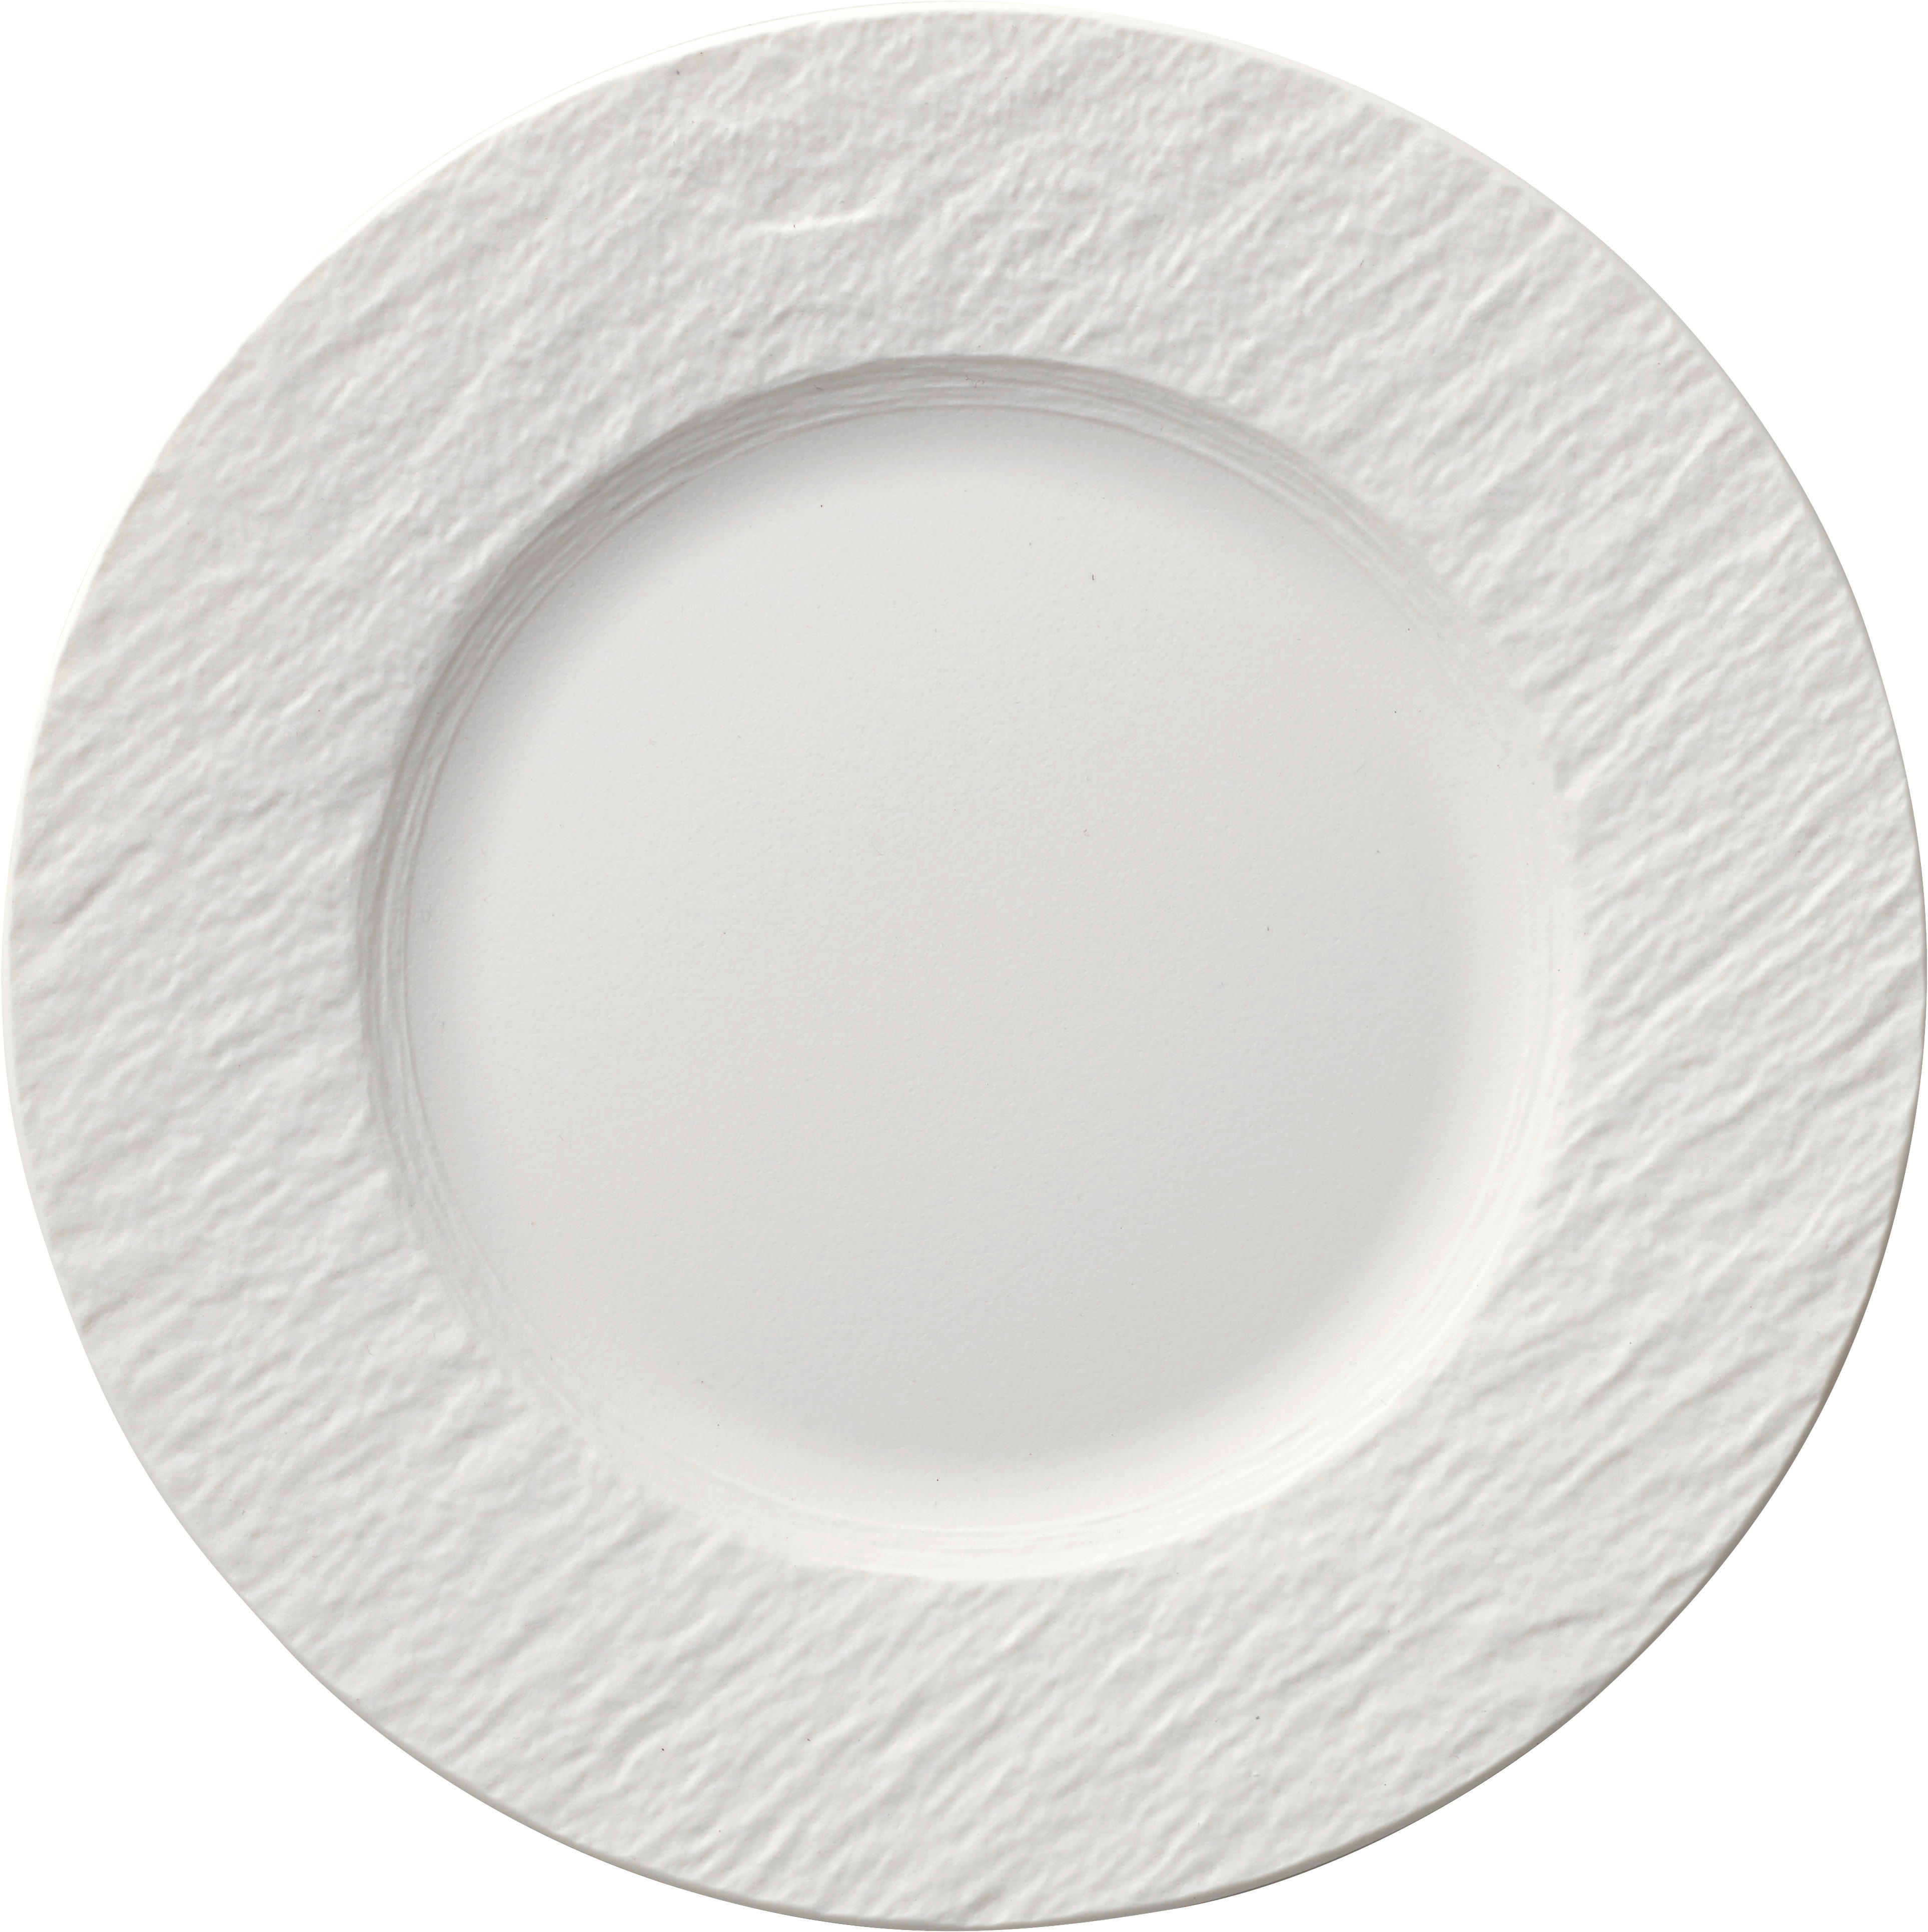 FRÜHSTÜCKSTELLER MANUFACTURE ROCK blanc  22 cm   - Weiß, Design, Keramik (22cm) - Villeroy & Boch